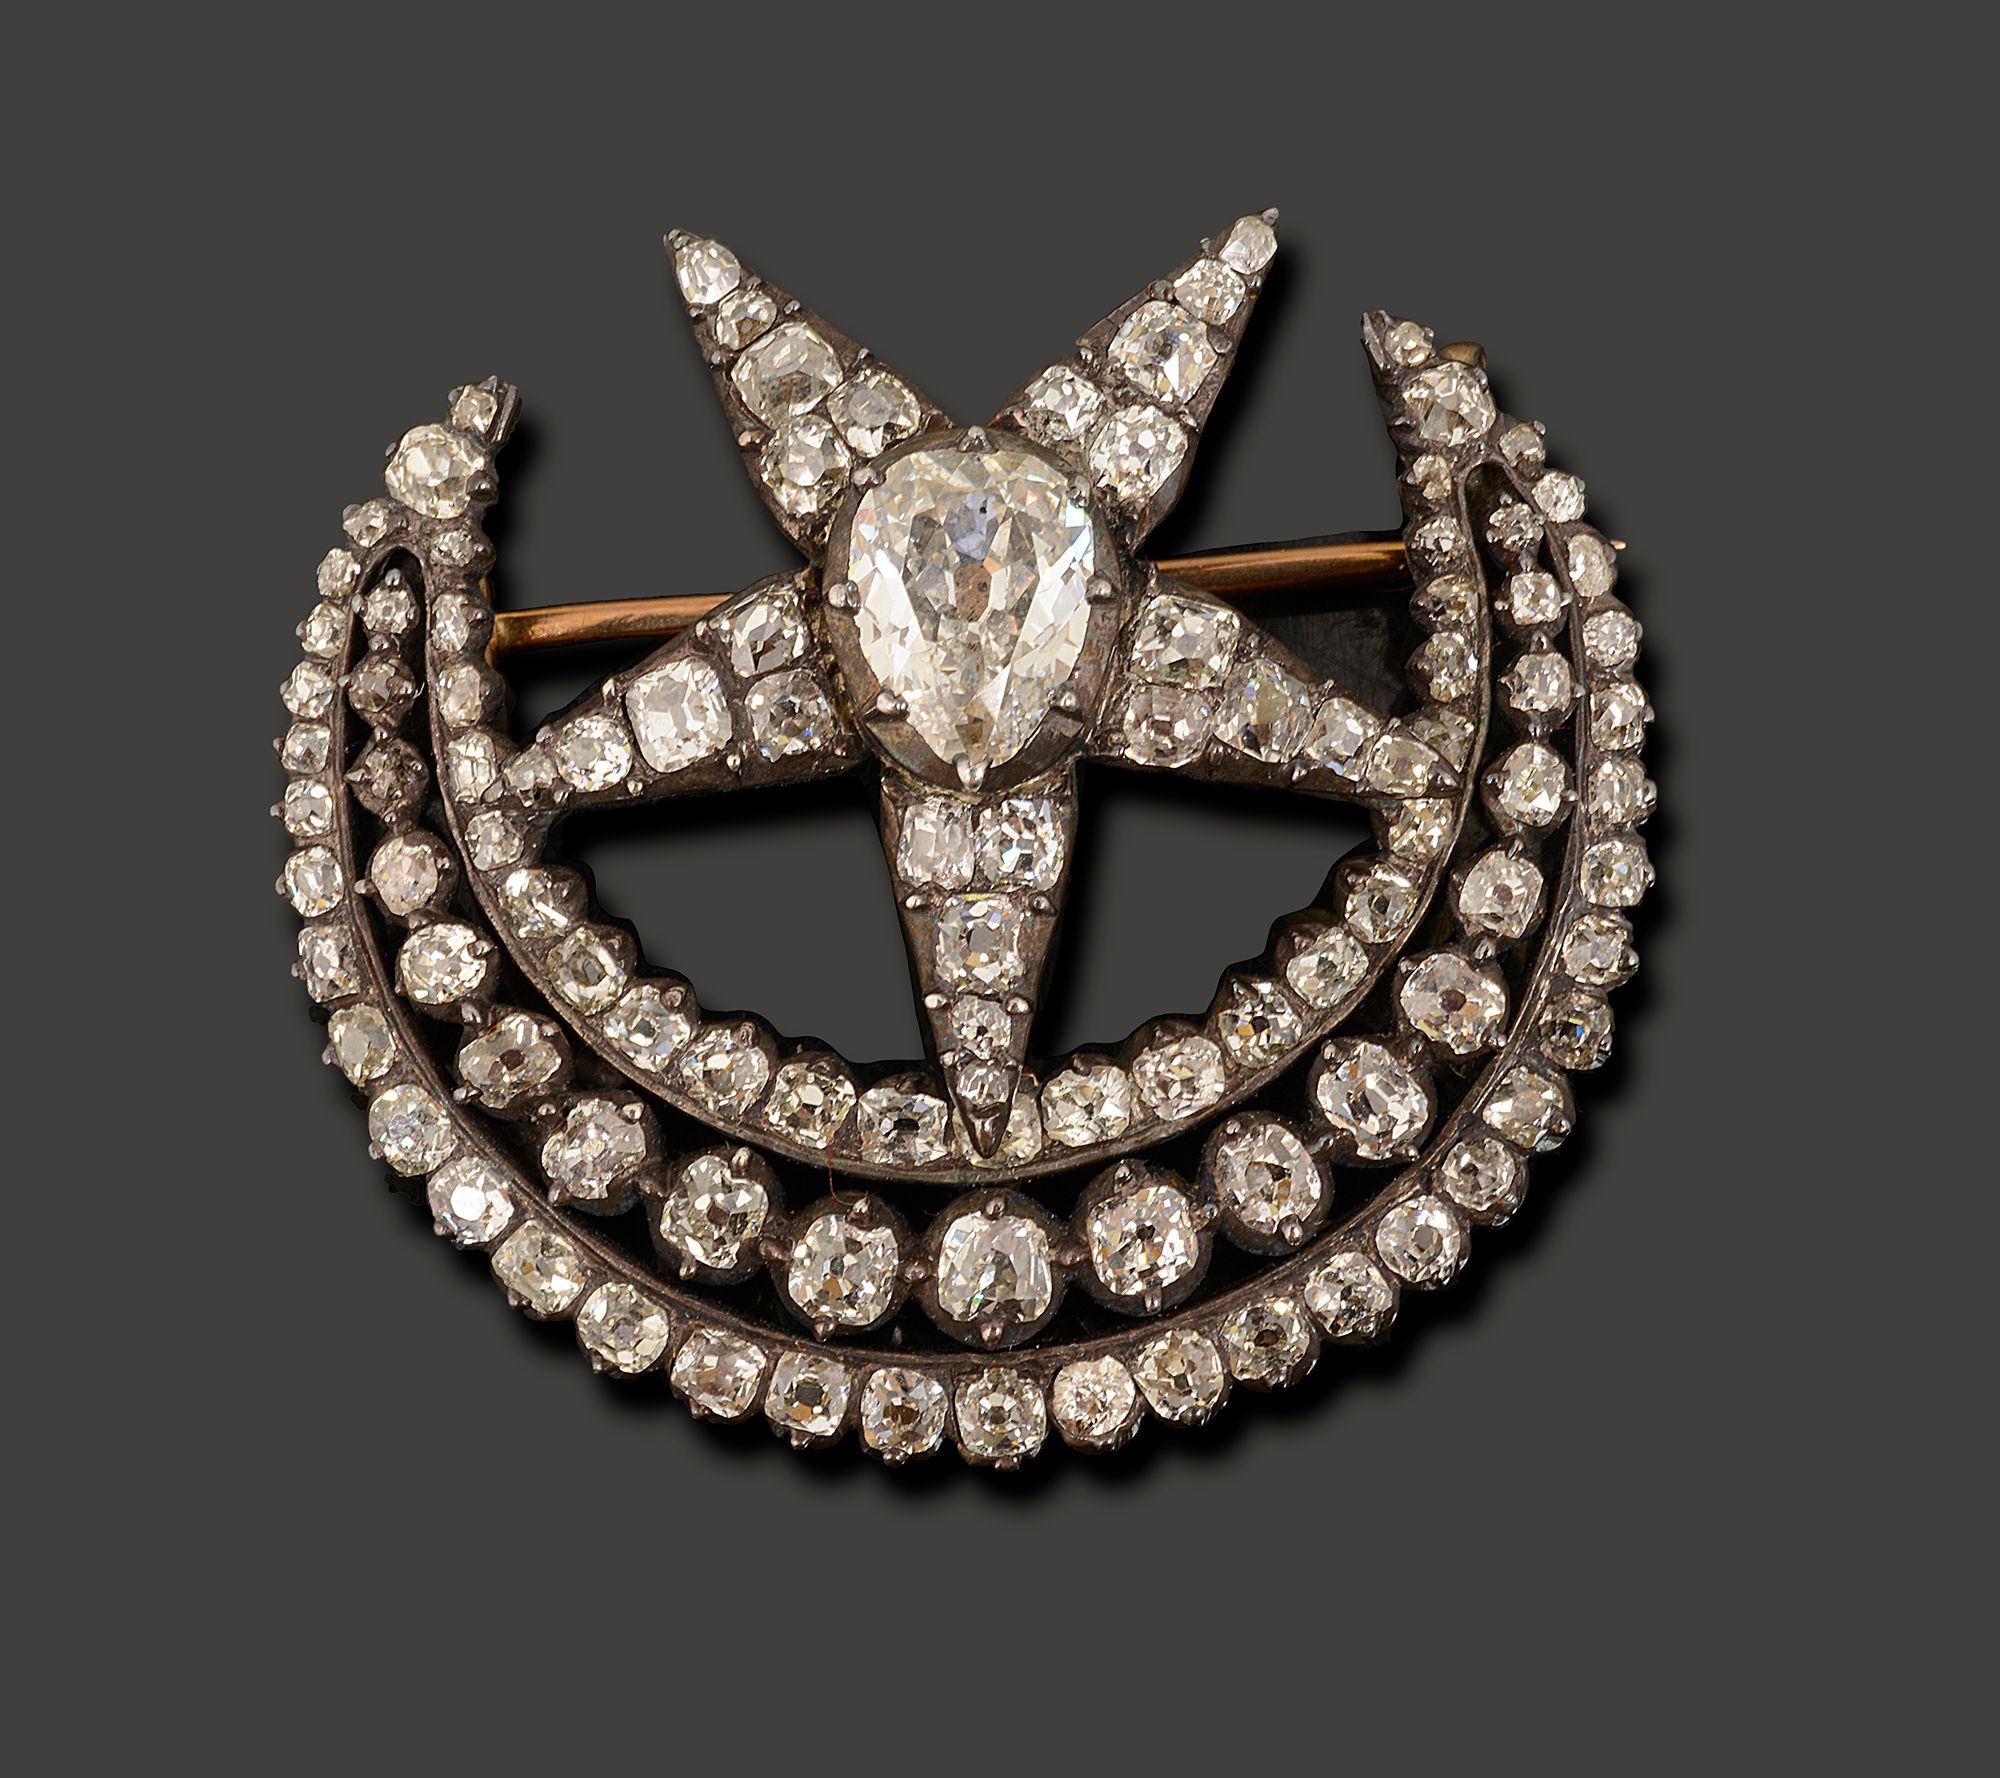 A late 18th/early 19th century diamond-set brooch